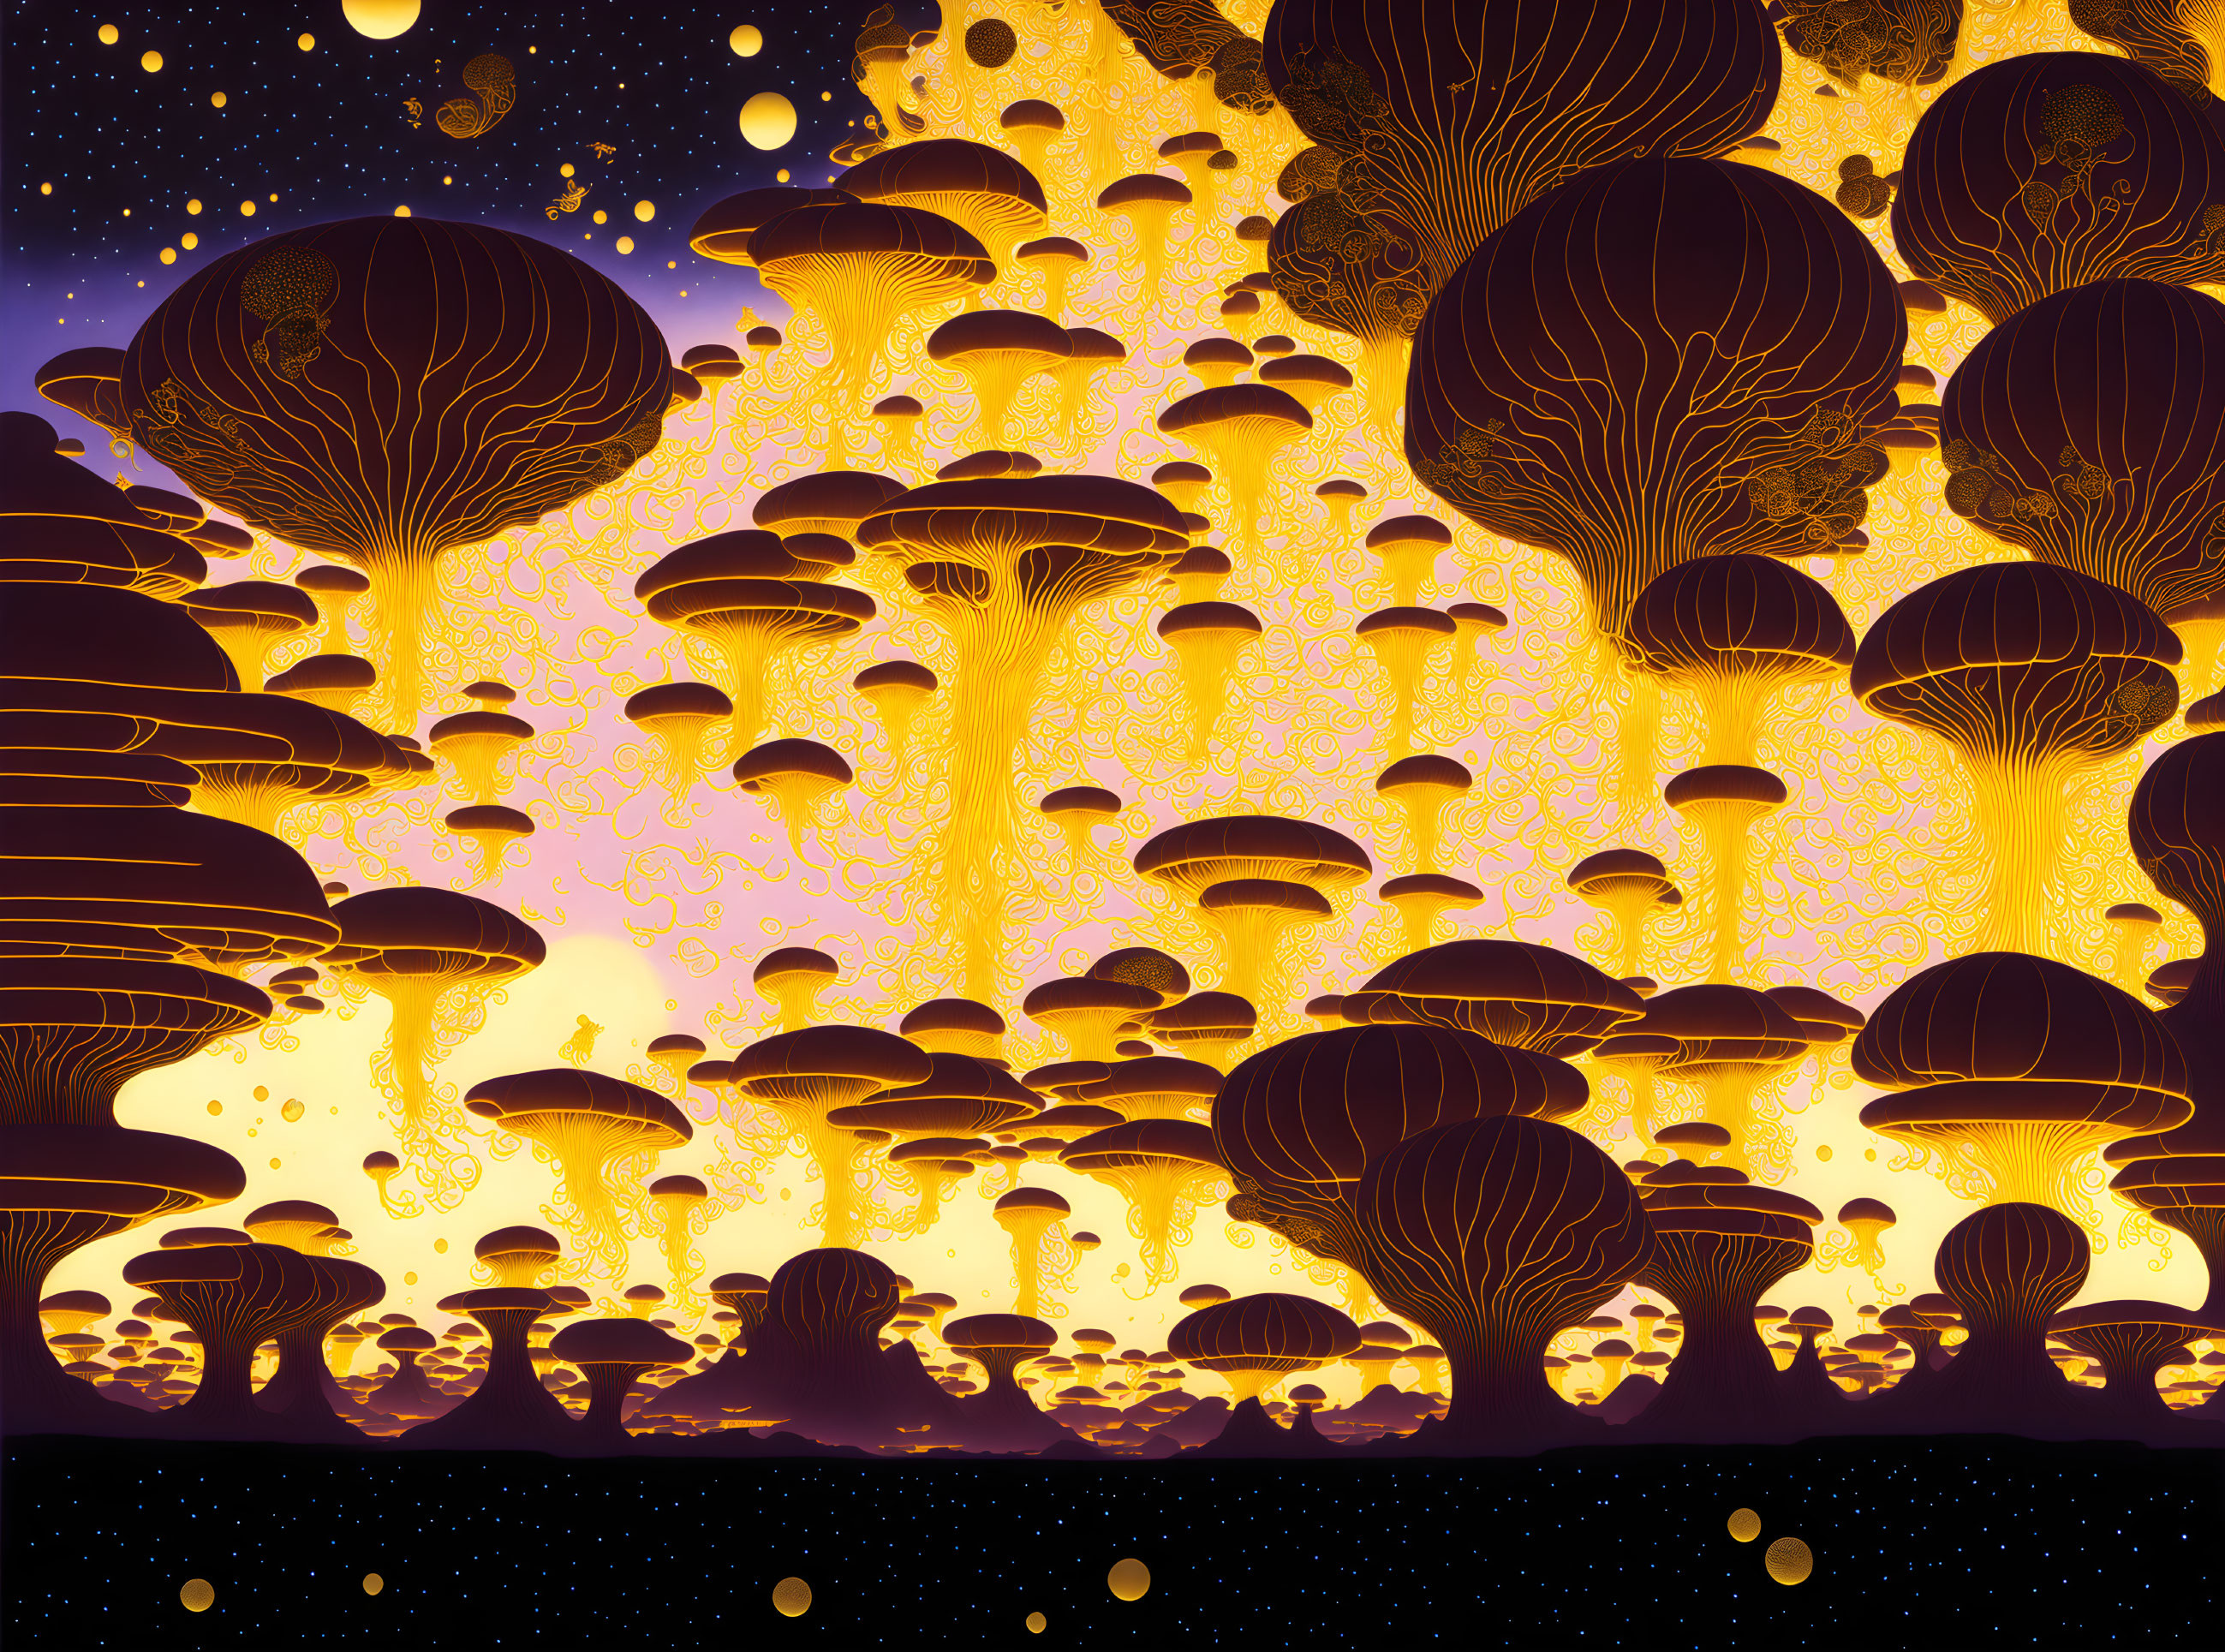 Golden Jellyfish flying in a alien planet.